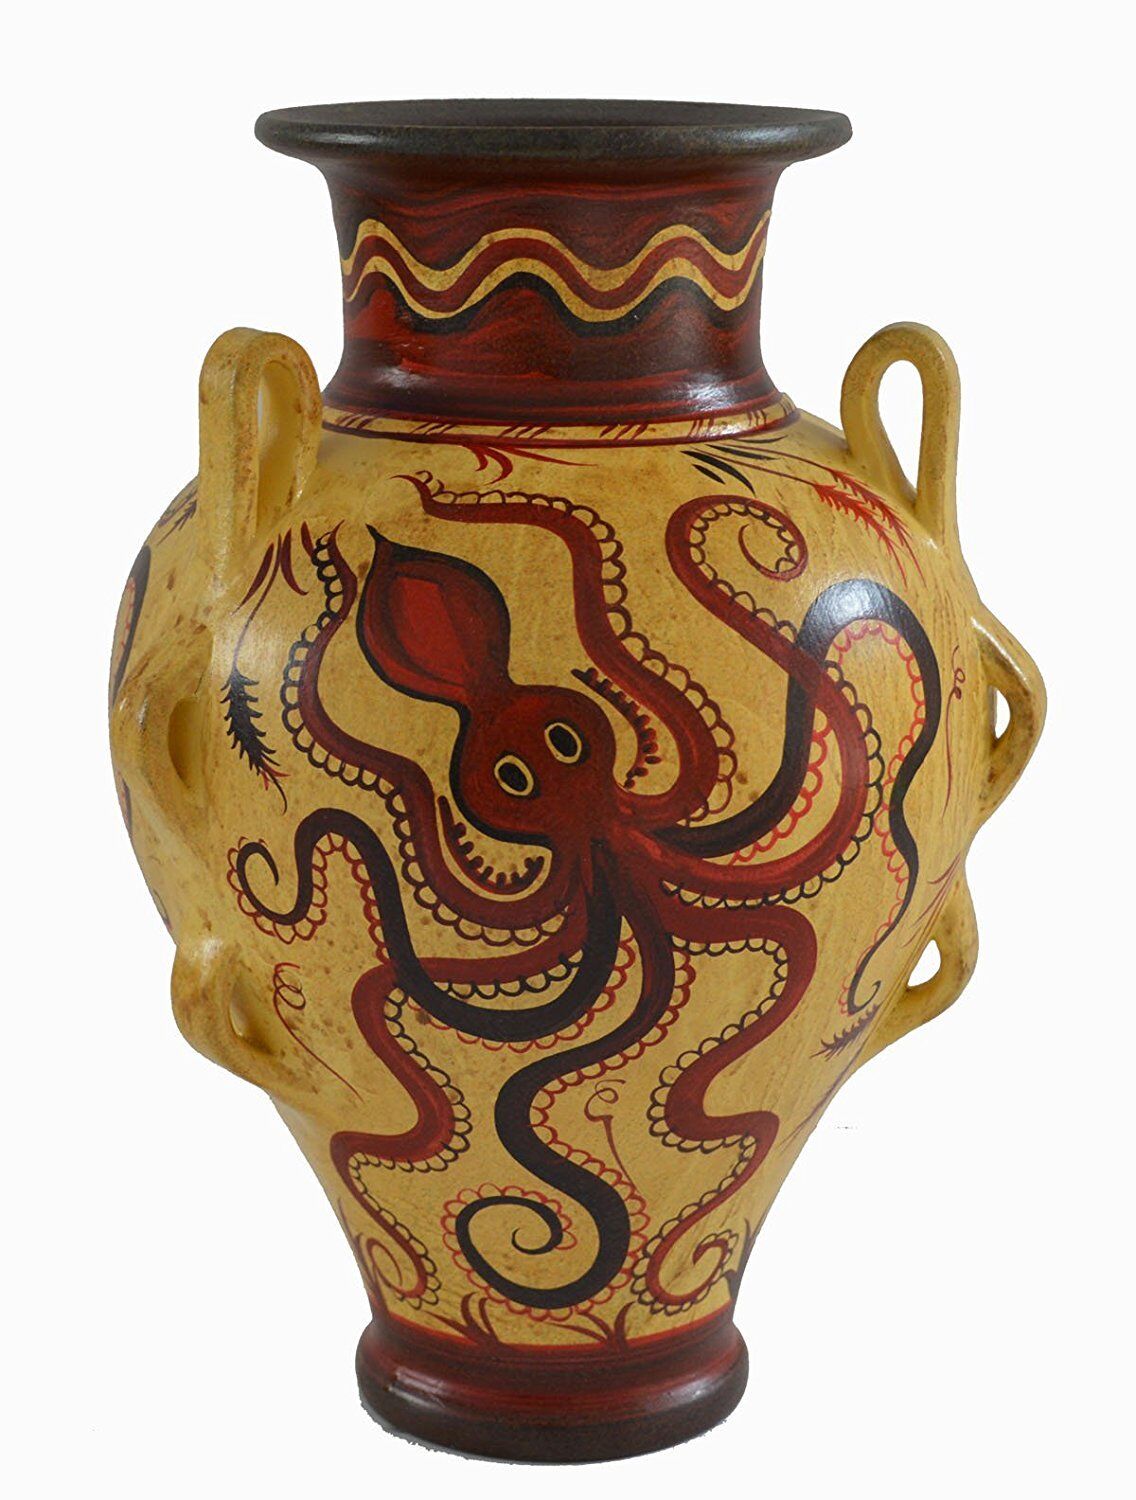 Minoan Pottery Amphora Vase - Octopus Design - Ancient Crete